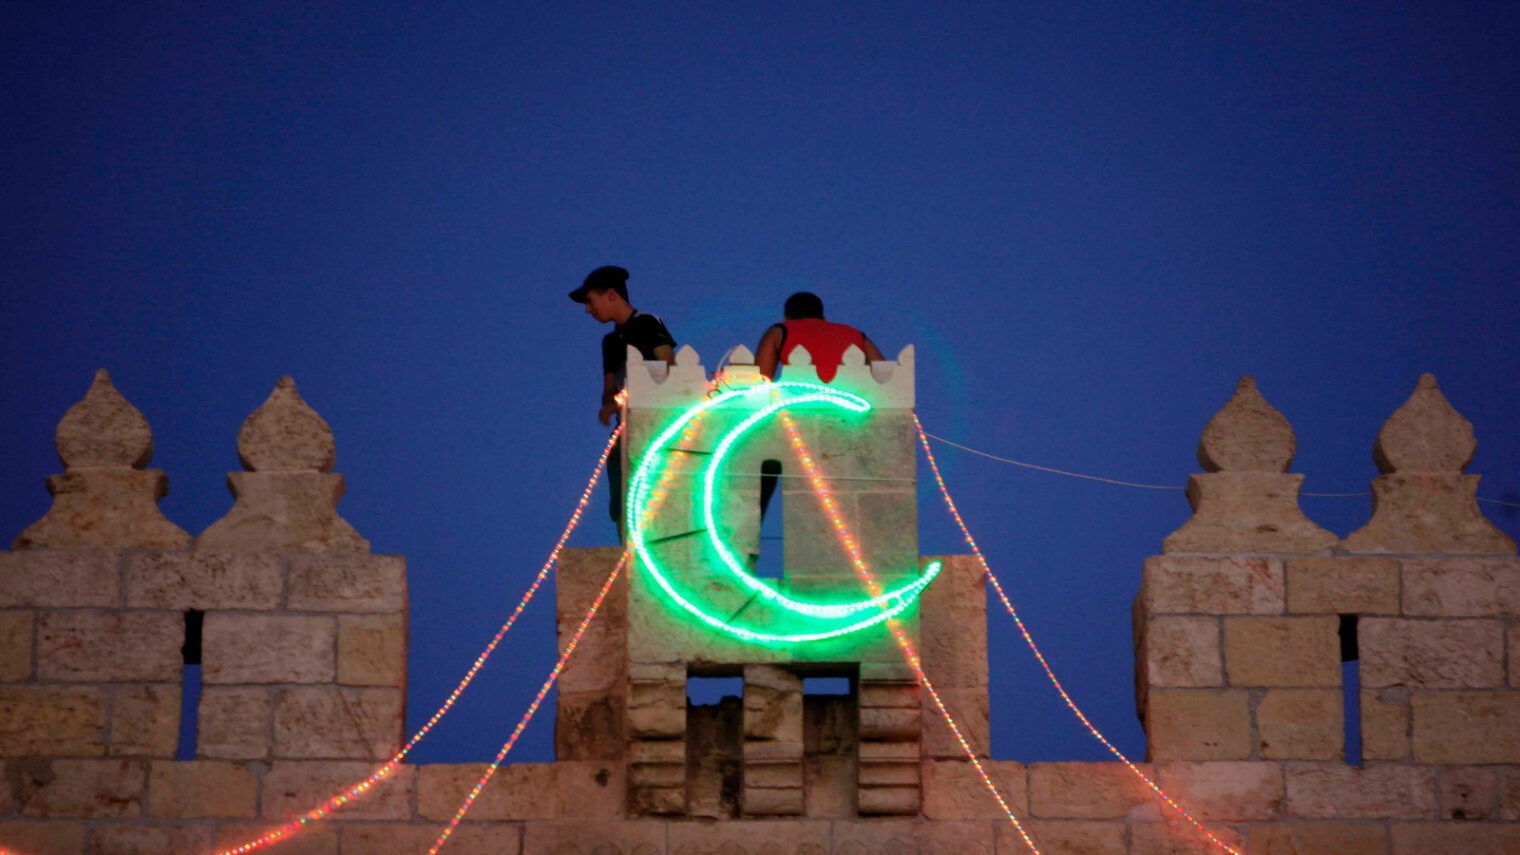 Hanging lights for Ramadan in Jerusalem. Photo by Sliman Khader/FLASH90